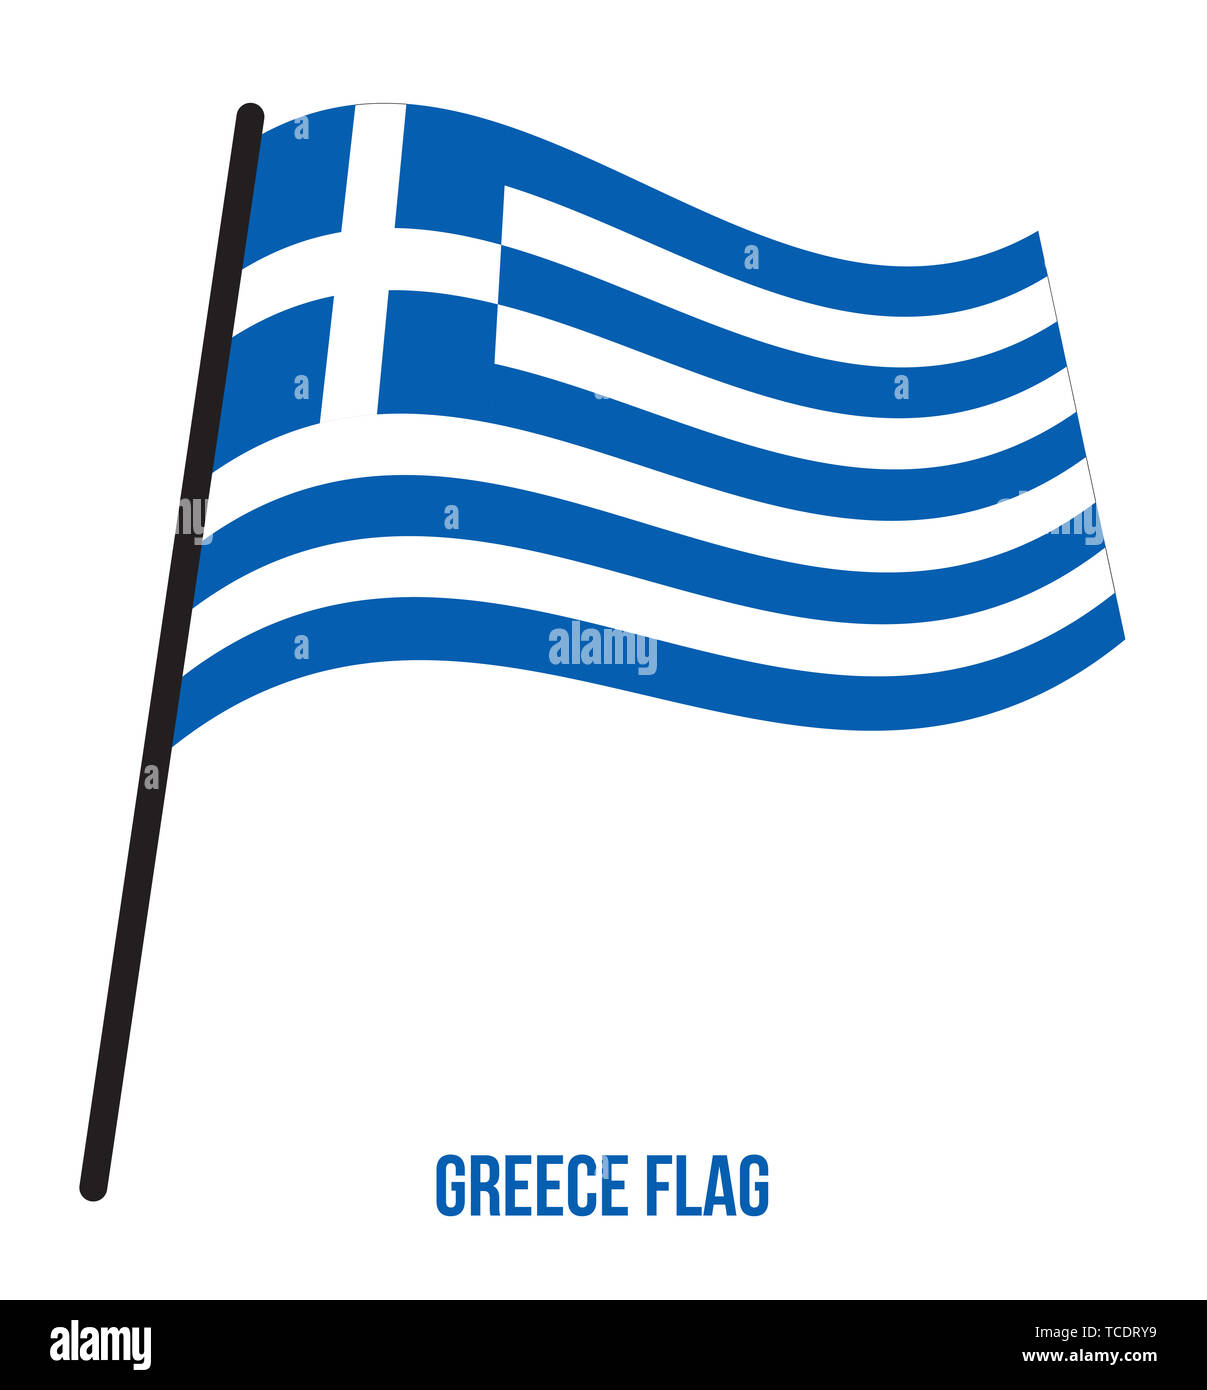 https://c8.alamy.com/comp/TCDRY9/greece-flag-waving-vector-illustration-on-white-background-greece-national-flag-TCDRY9.jpg